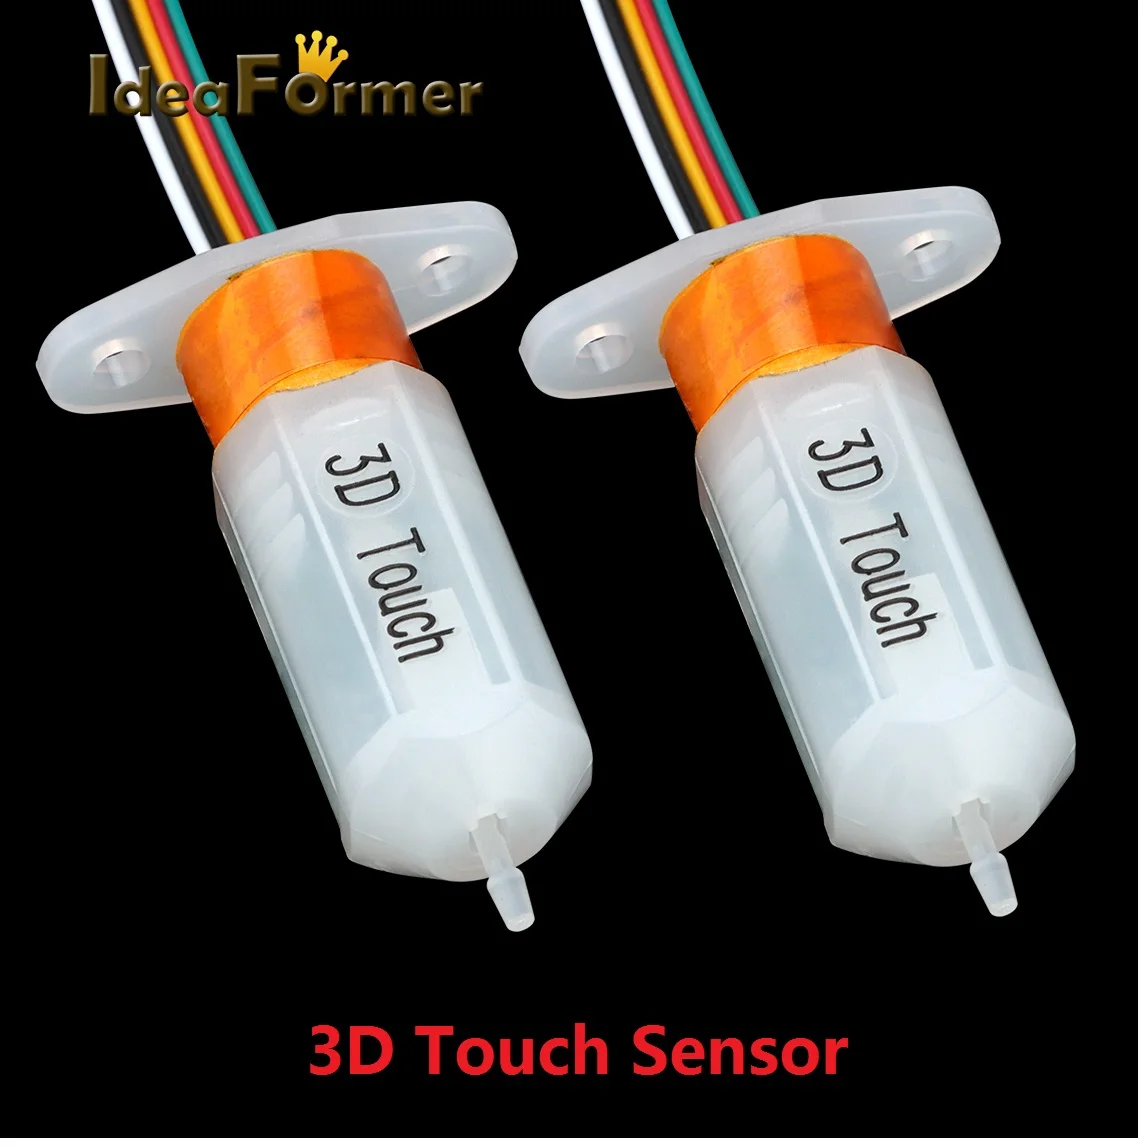 IdeaFormer 3DTouch Sensor Auto Bed Leveling Sensor 3D Printer Parts For CR10 CR10S Ender 3 Pro Anet A8 tevo Reprap mk8 i3 db 3d printer part 3d touch sensor auto bed leveling sensor bl touch for 3d printer parts reprap mk8 ender 3 pro cr 10